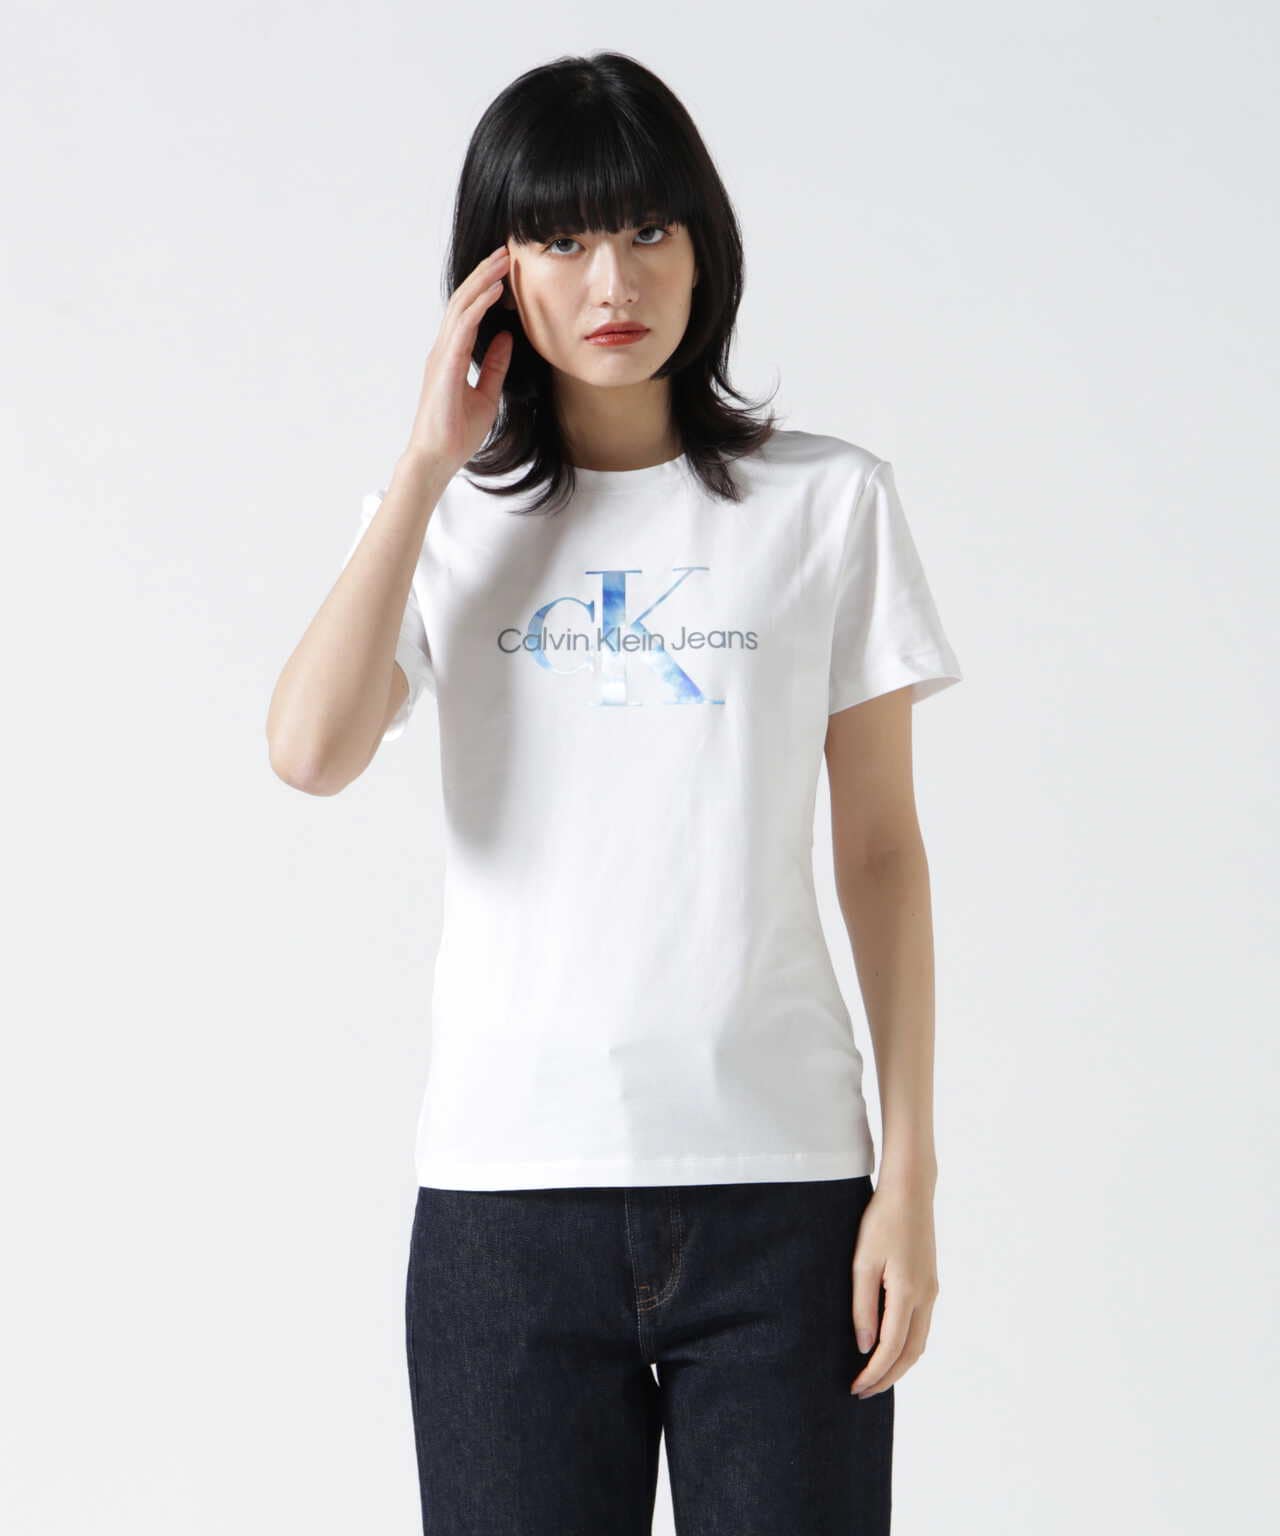 Calvin Klein Jeans（カルバンクラインジーンズ）アクアプリントモノグラムTシャツ B'2nd ビーセカンド US  ONLINE STORE（US オンラインストア）